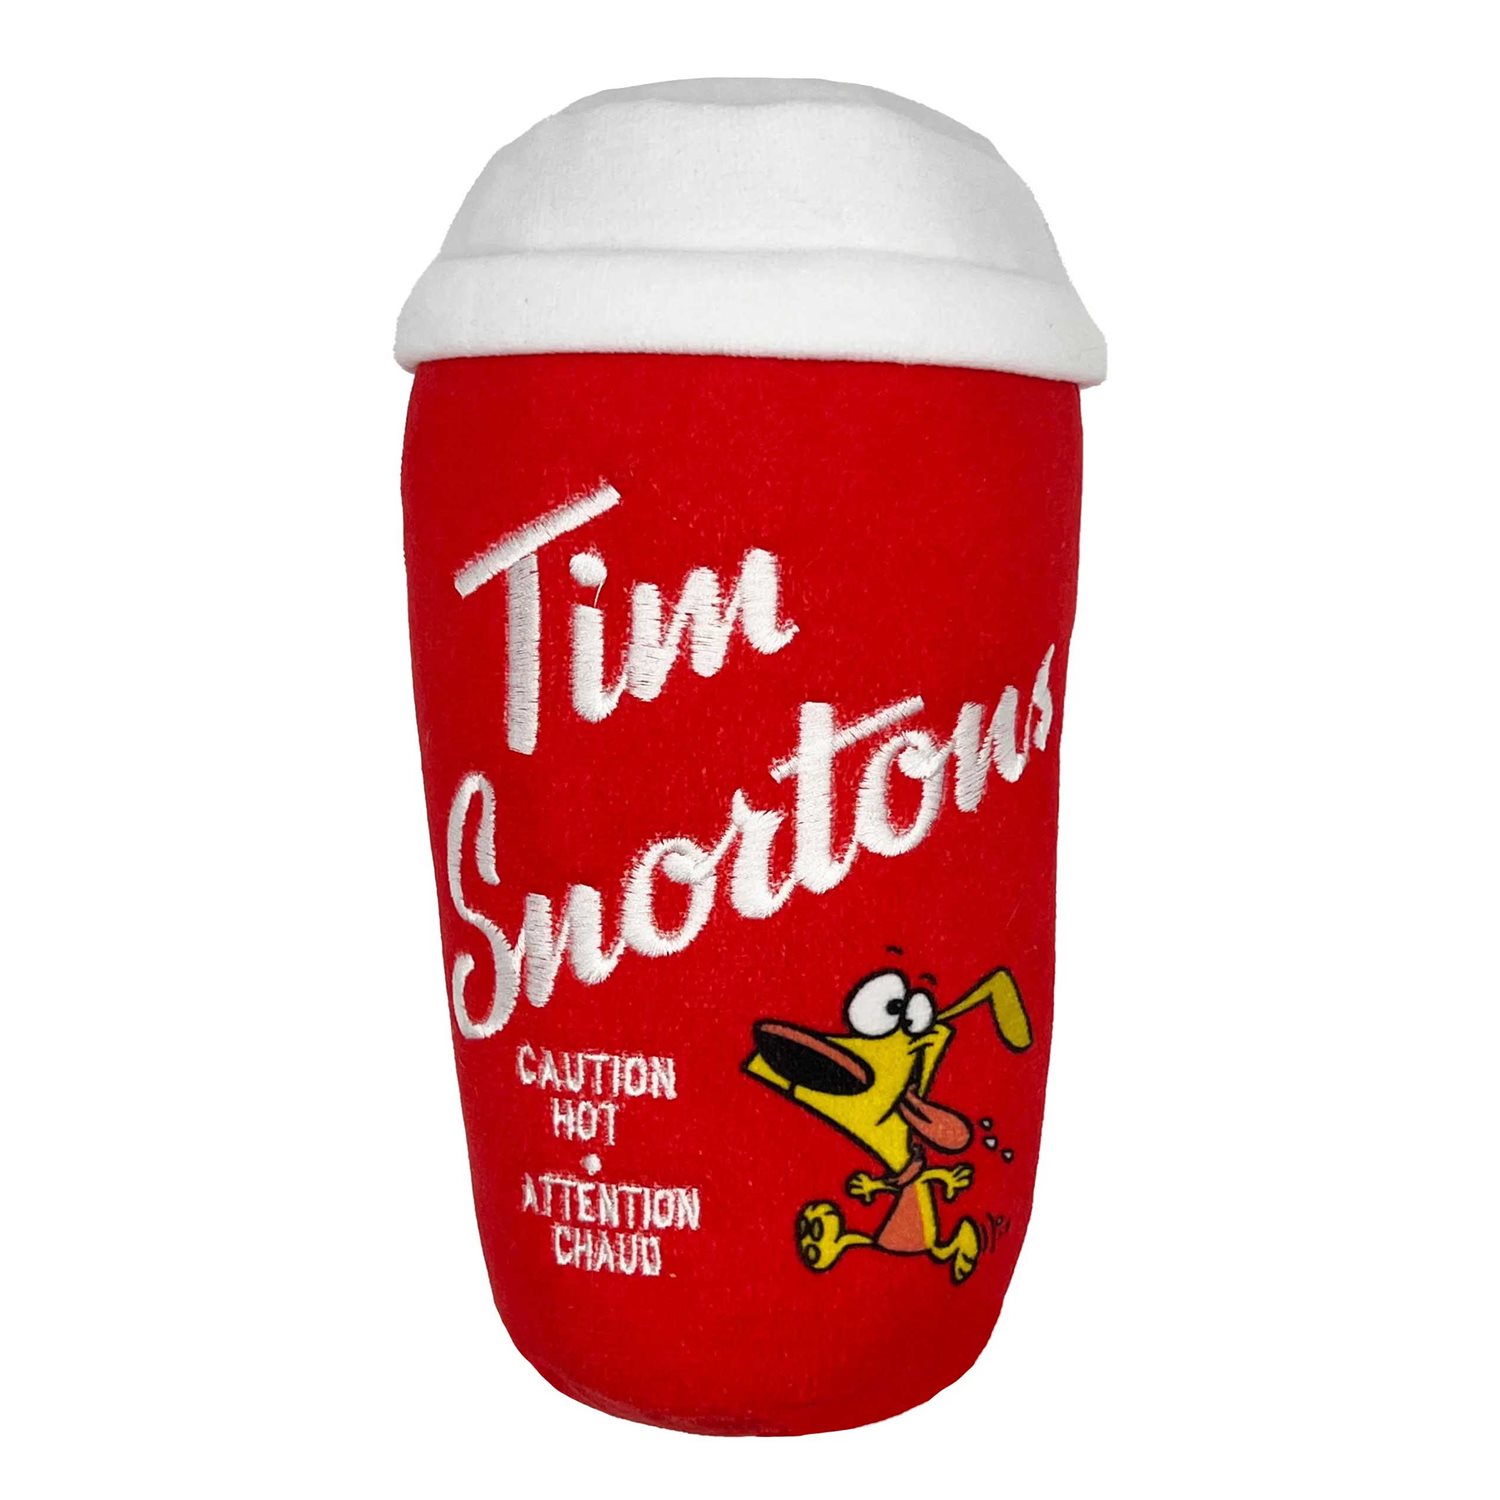 Tim Snorton Coffee